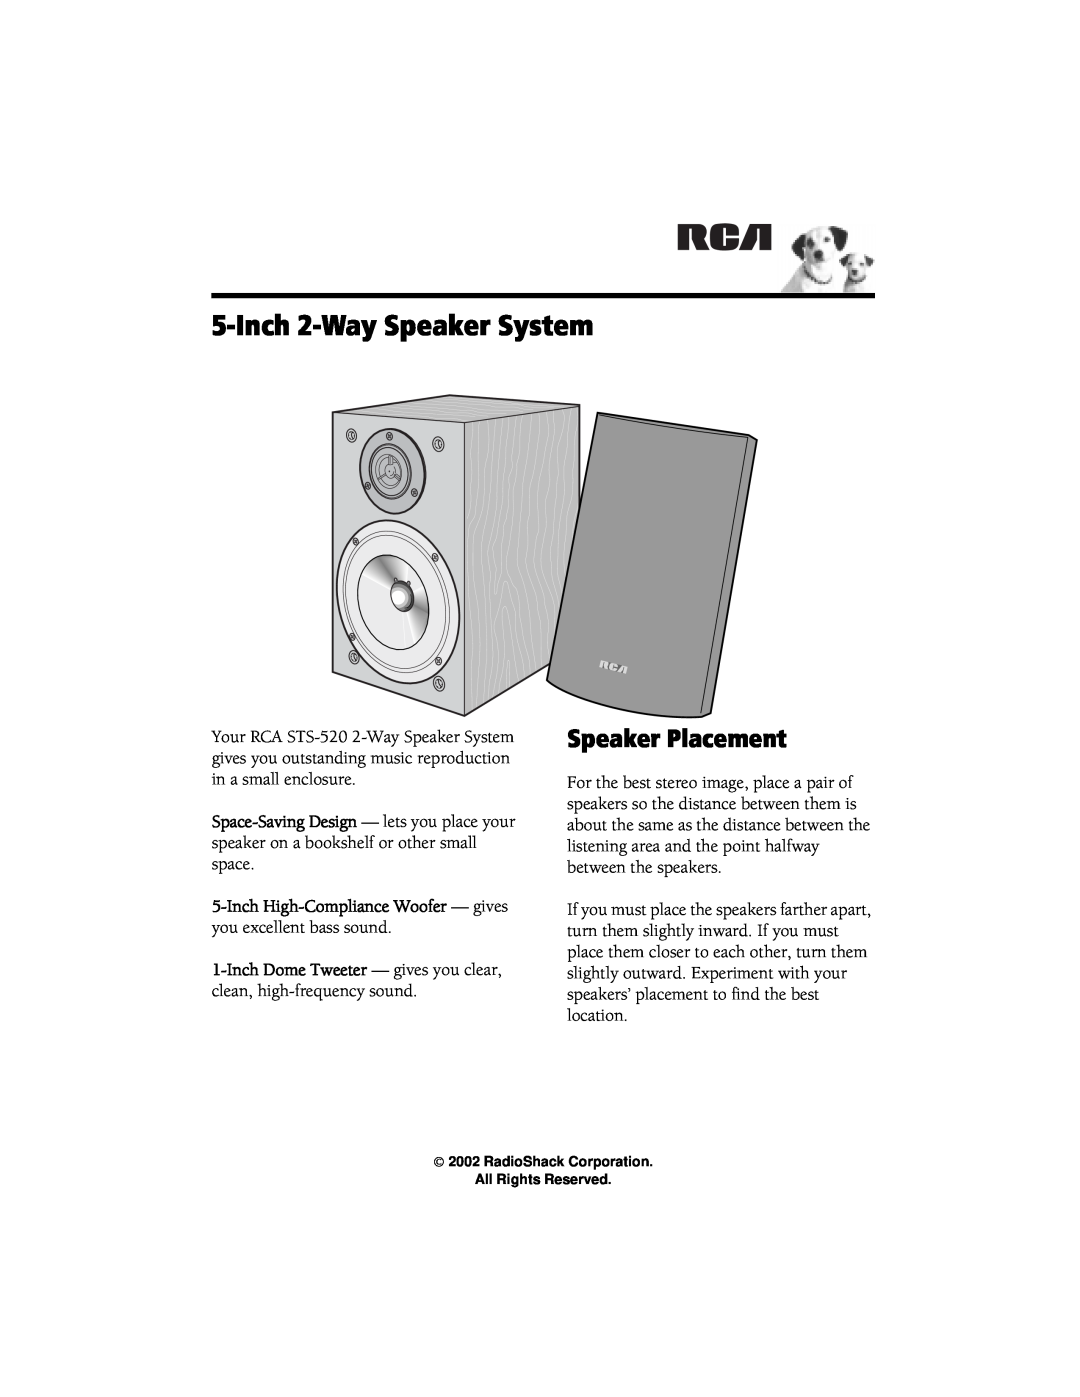 Radio Shack STS-520 manual Speaker Placement, Inch 2-WaySpeaker System 